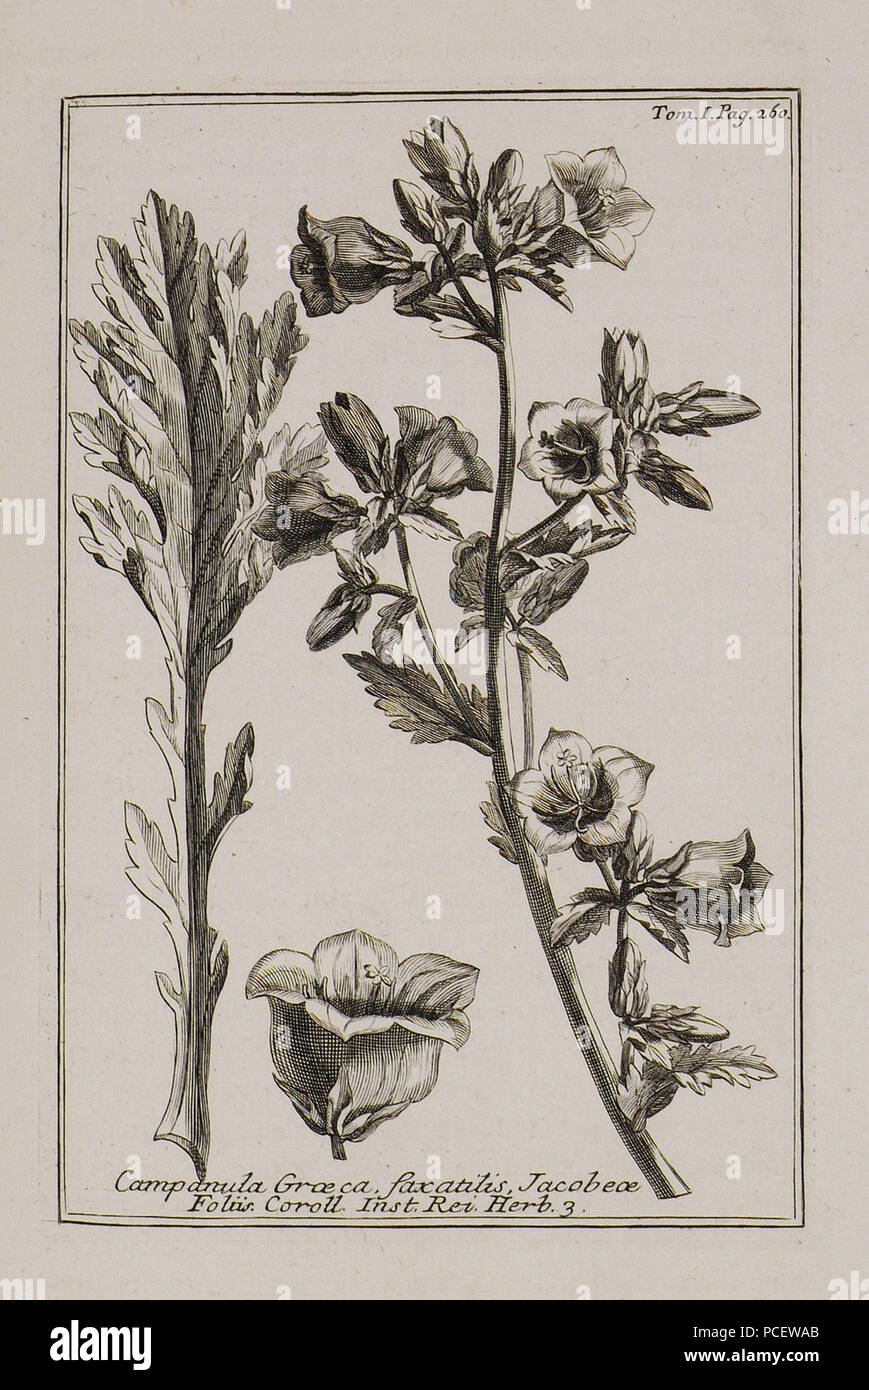 110 Campanula Graeca, faxatilis Jacobae folio Coroll Inst Rei herb 3 - Tournefort Joseph Pitton De - 1717 Stock Photo